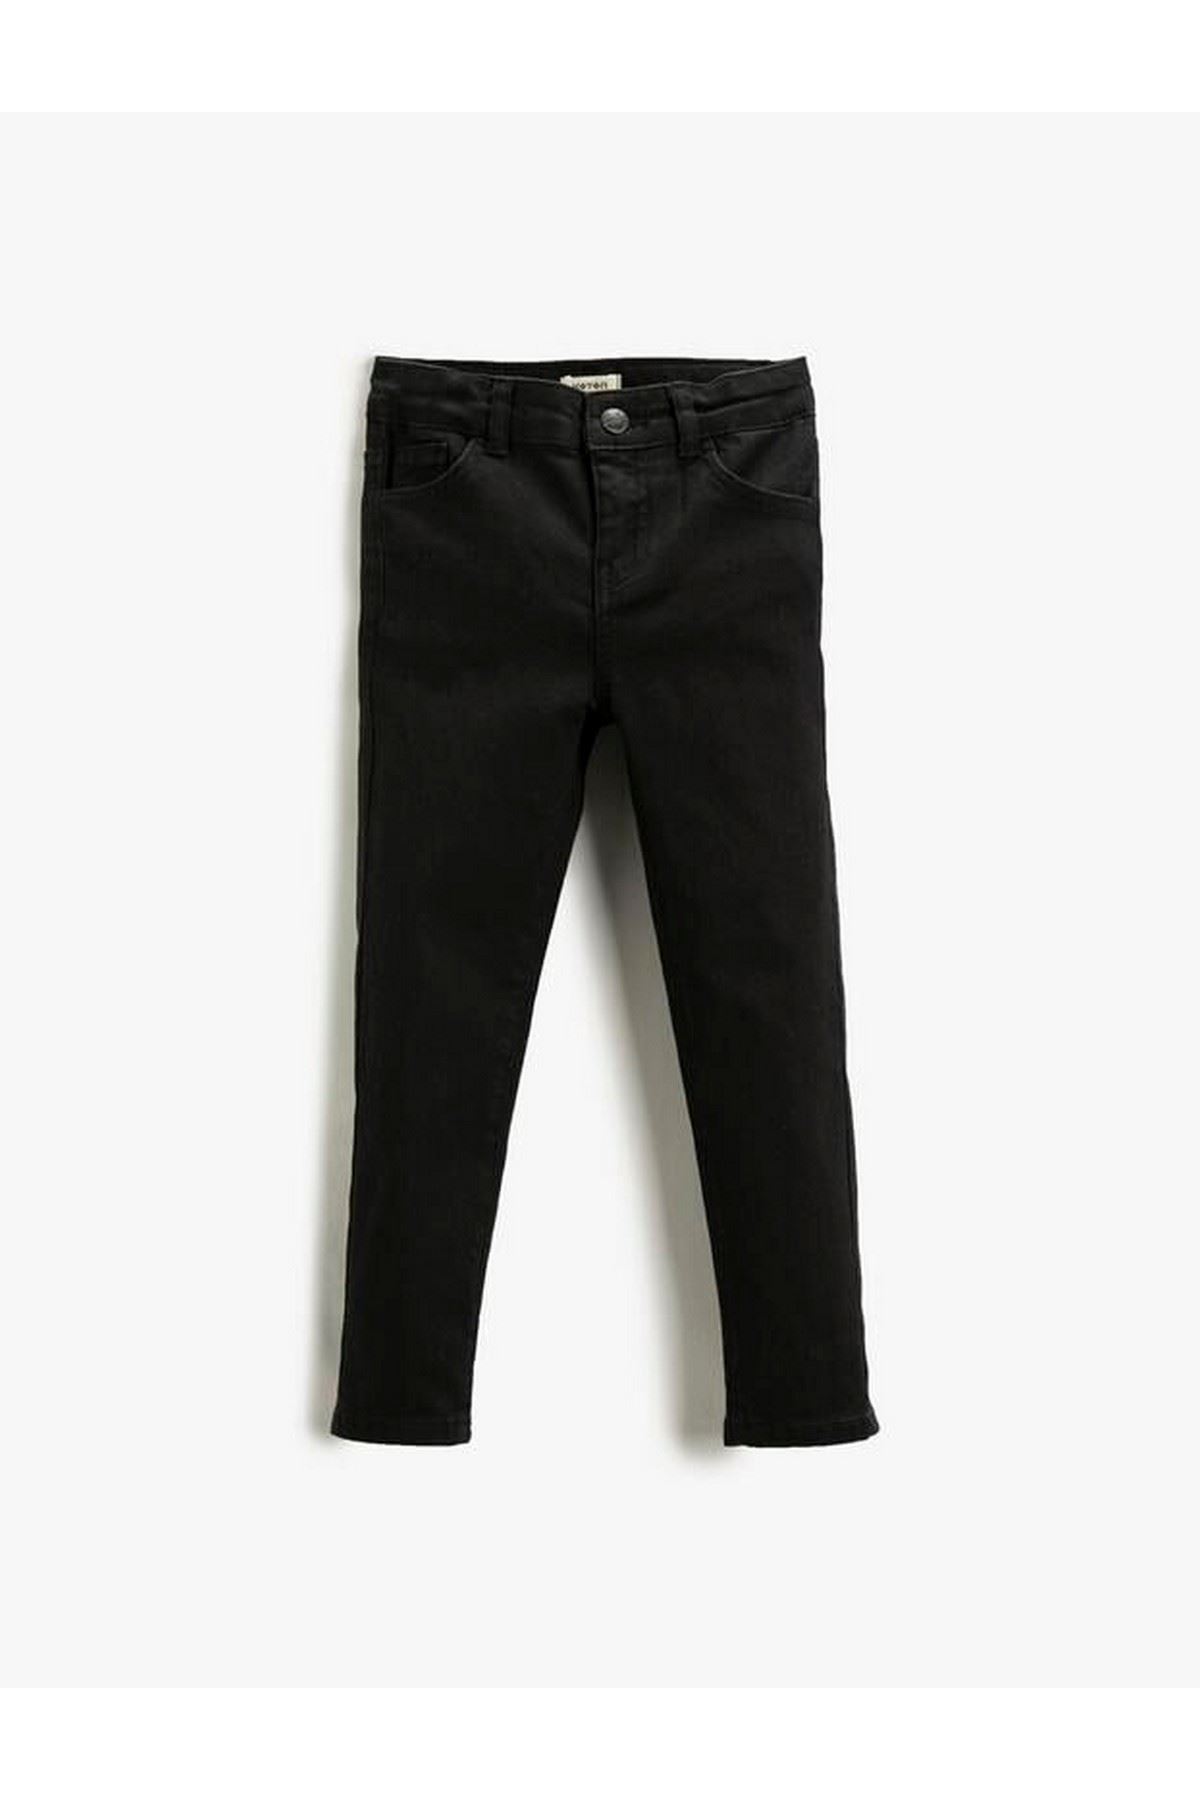 Koton Erkek Çocuk Siyah Jean Pantolon - 3WKB40001TD